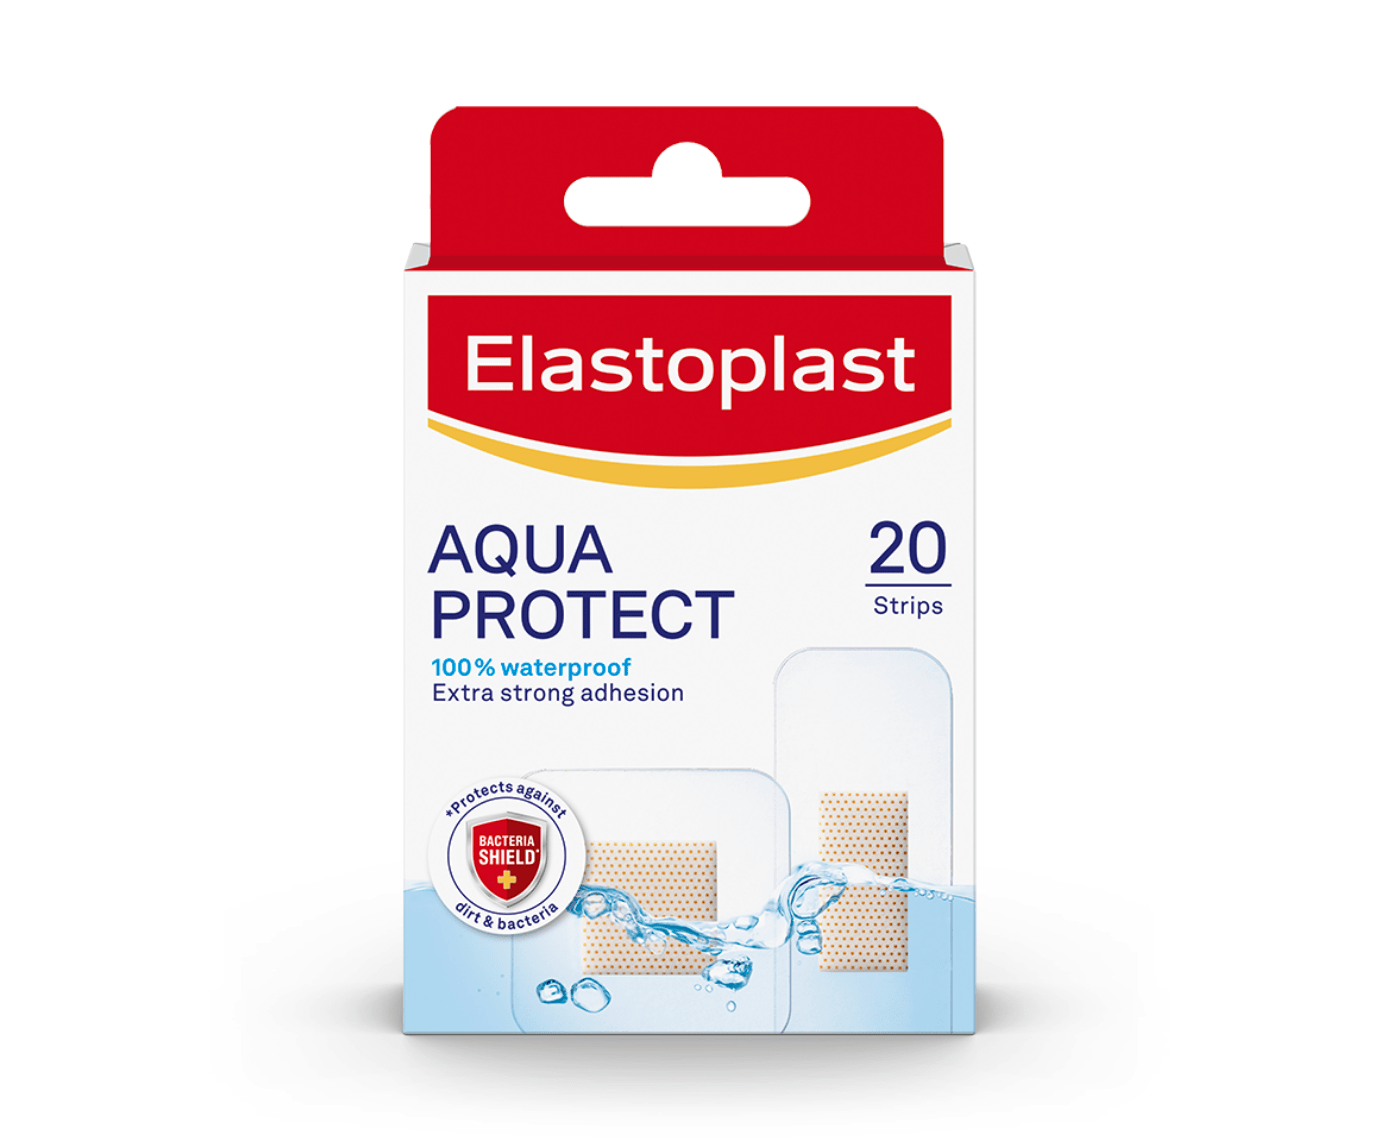 Packshot of Elastoplast Aqua Protect plasters